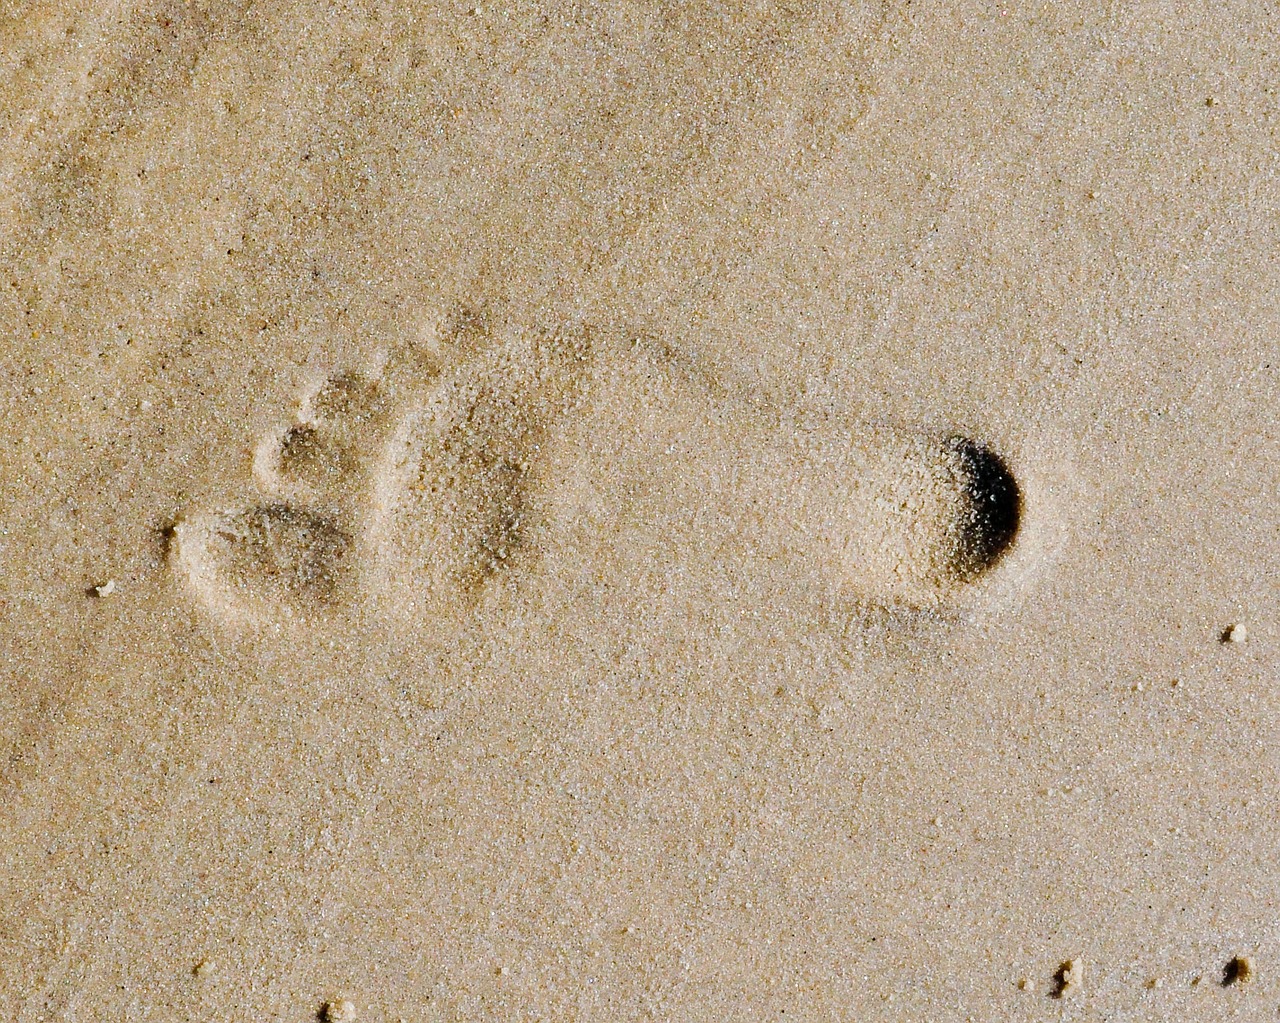 footprint sandy beaches free photo